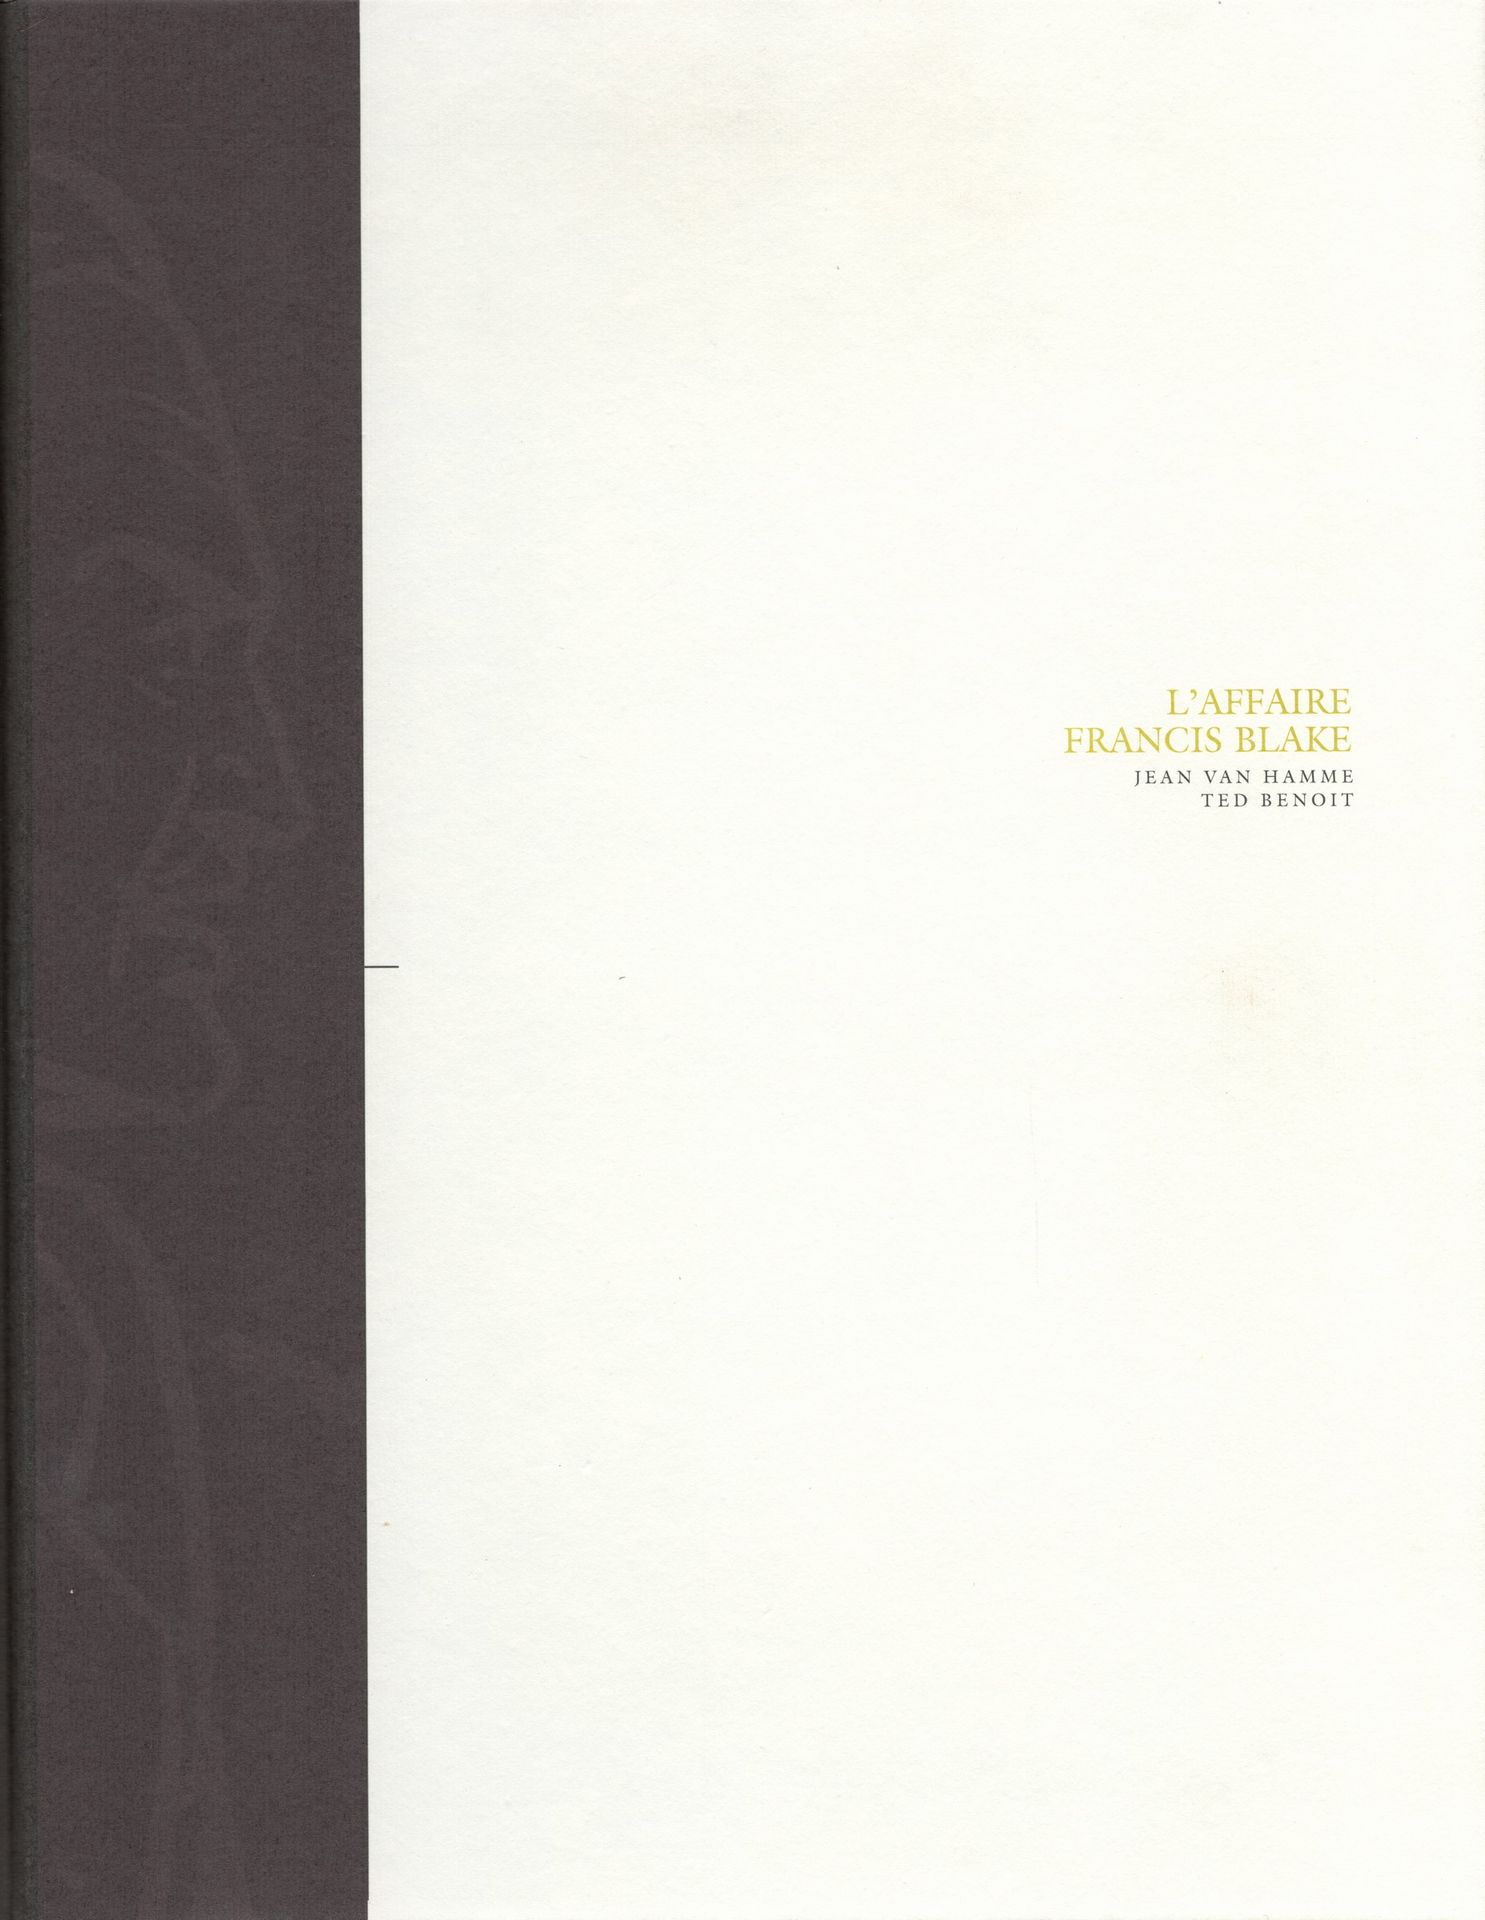 TED BENOIT 布莱克和莫蒂默。第13卷：弗朗西斯-布莱克案。第一版599册，由泰德-伯努瓦的N°/S。 布莱克和莫蒂默，1999年。接近于新的。